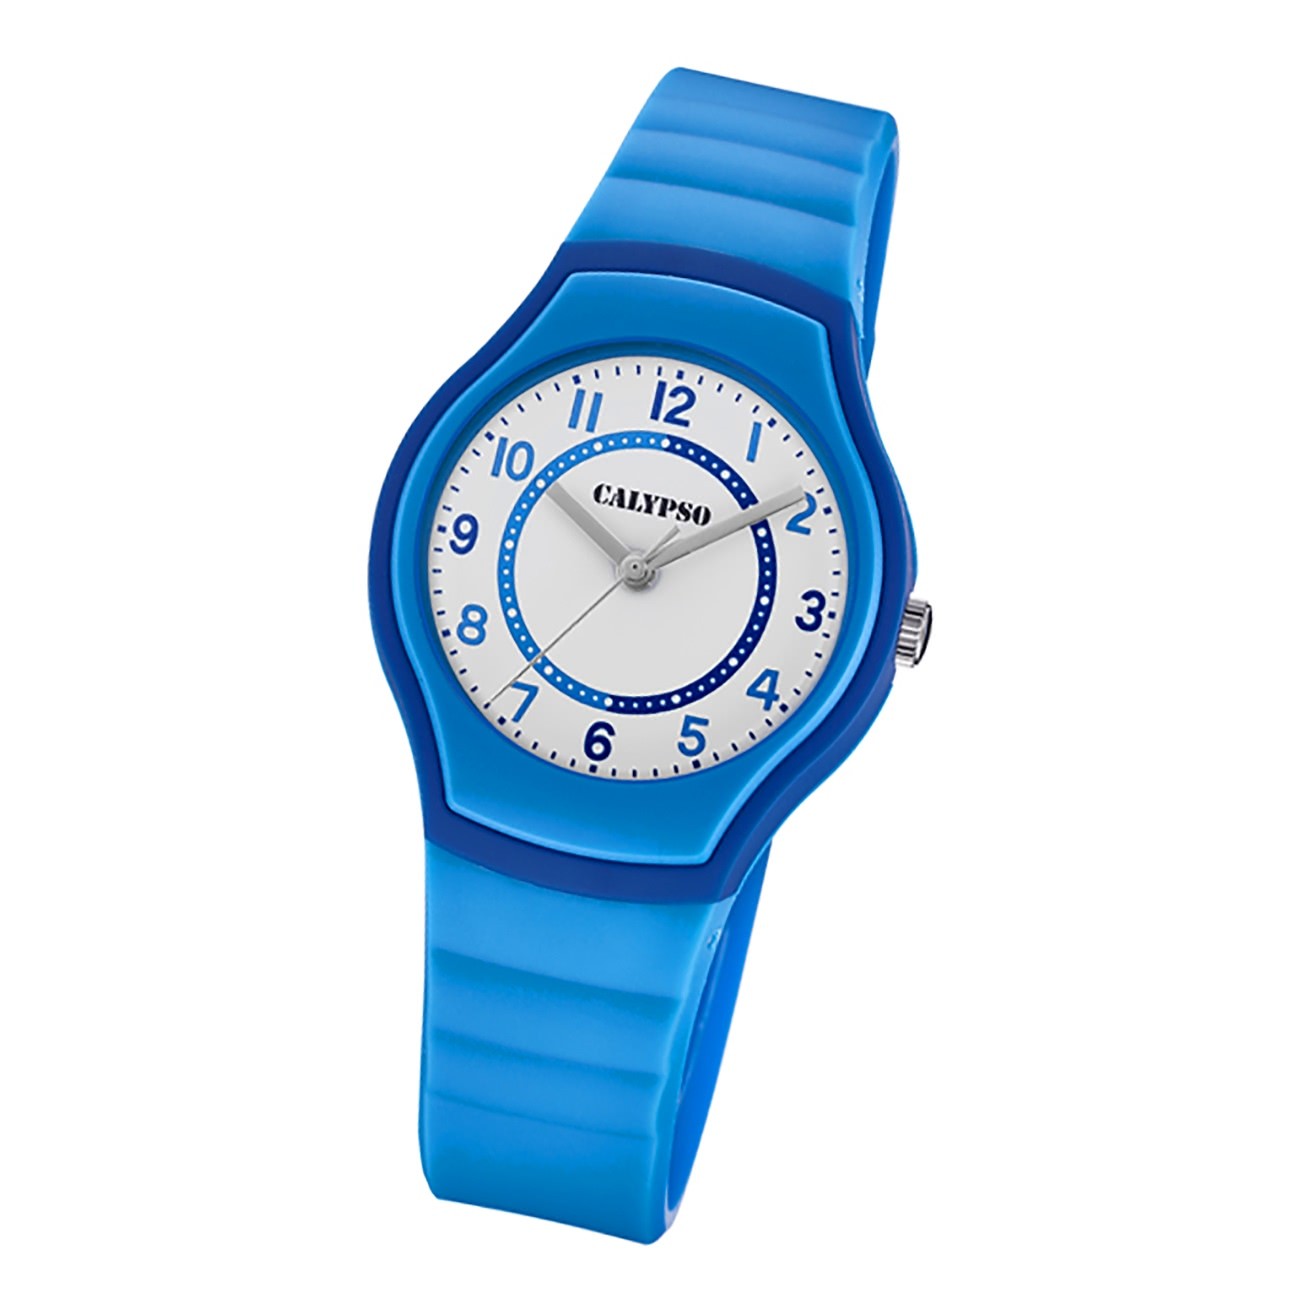 Calypso Jugend Armbanduhr Junior K5806/6 Analog Kunststoff blau UK5806/6